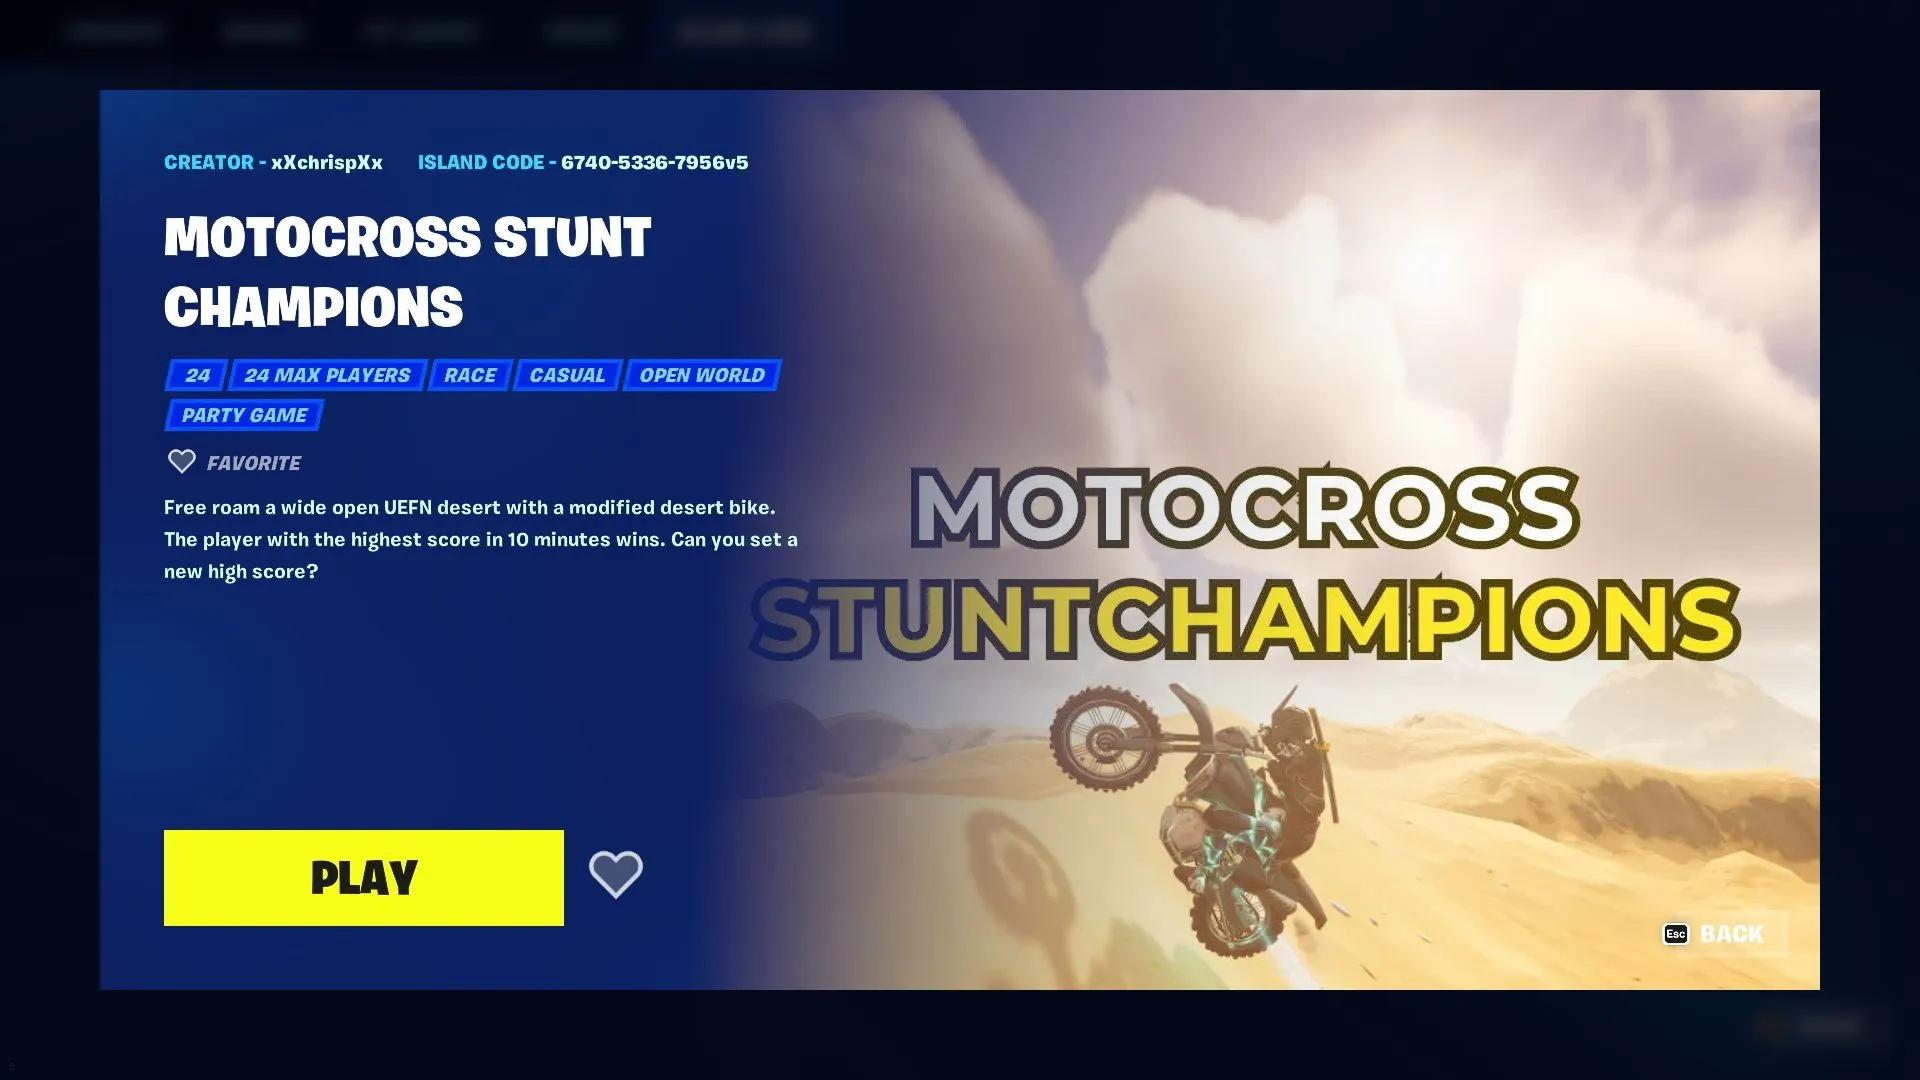 Motocross Stunt Champions -6740-5336-7956 (Изображение через Epic Games/xXchrispXx)